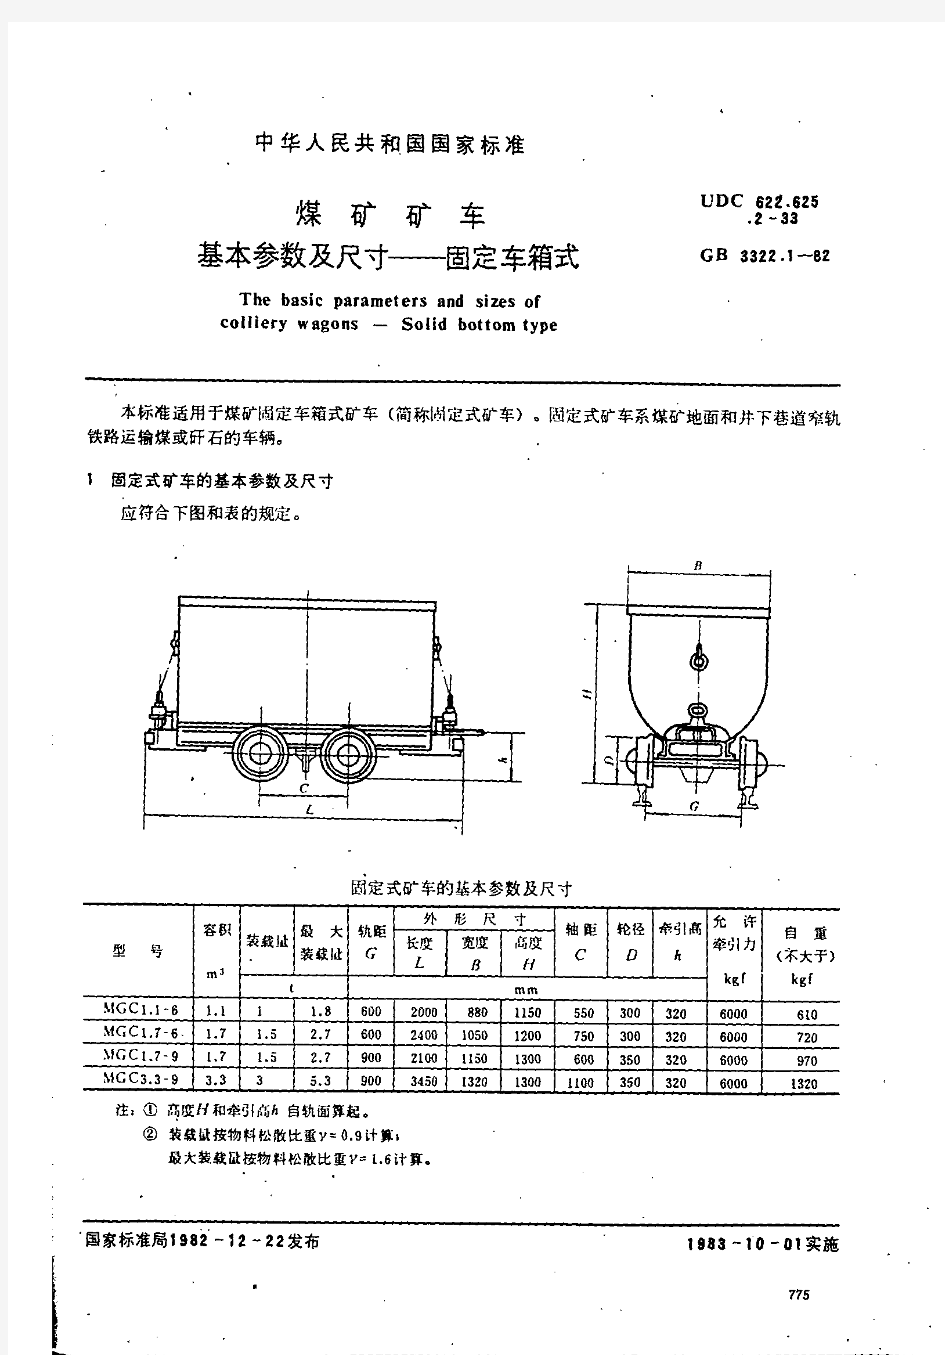 GB3322[1].1-82煤矿矿车基本参数及尺寸—固定车箱式